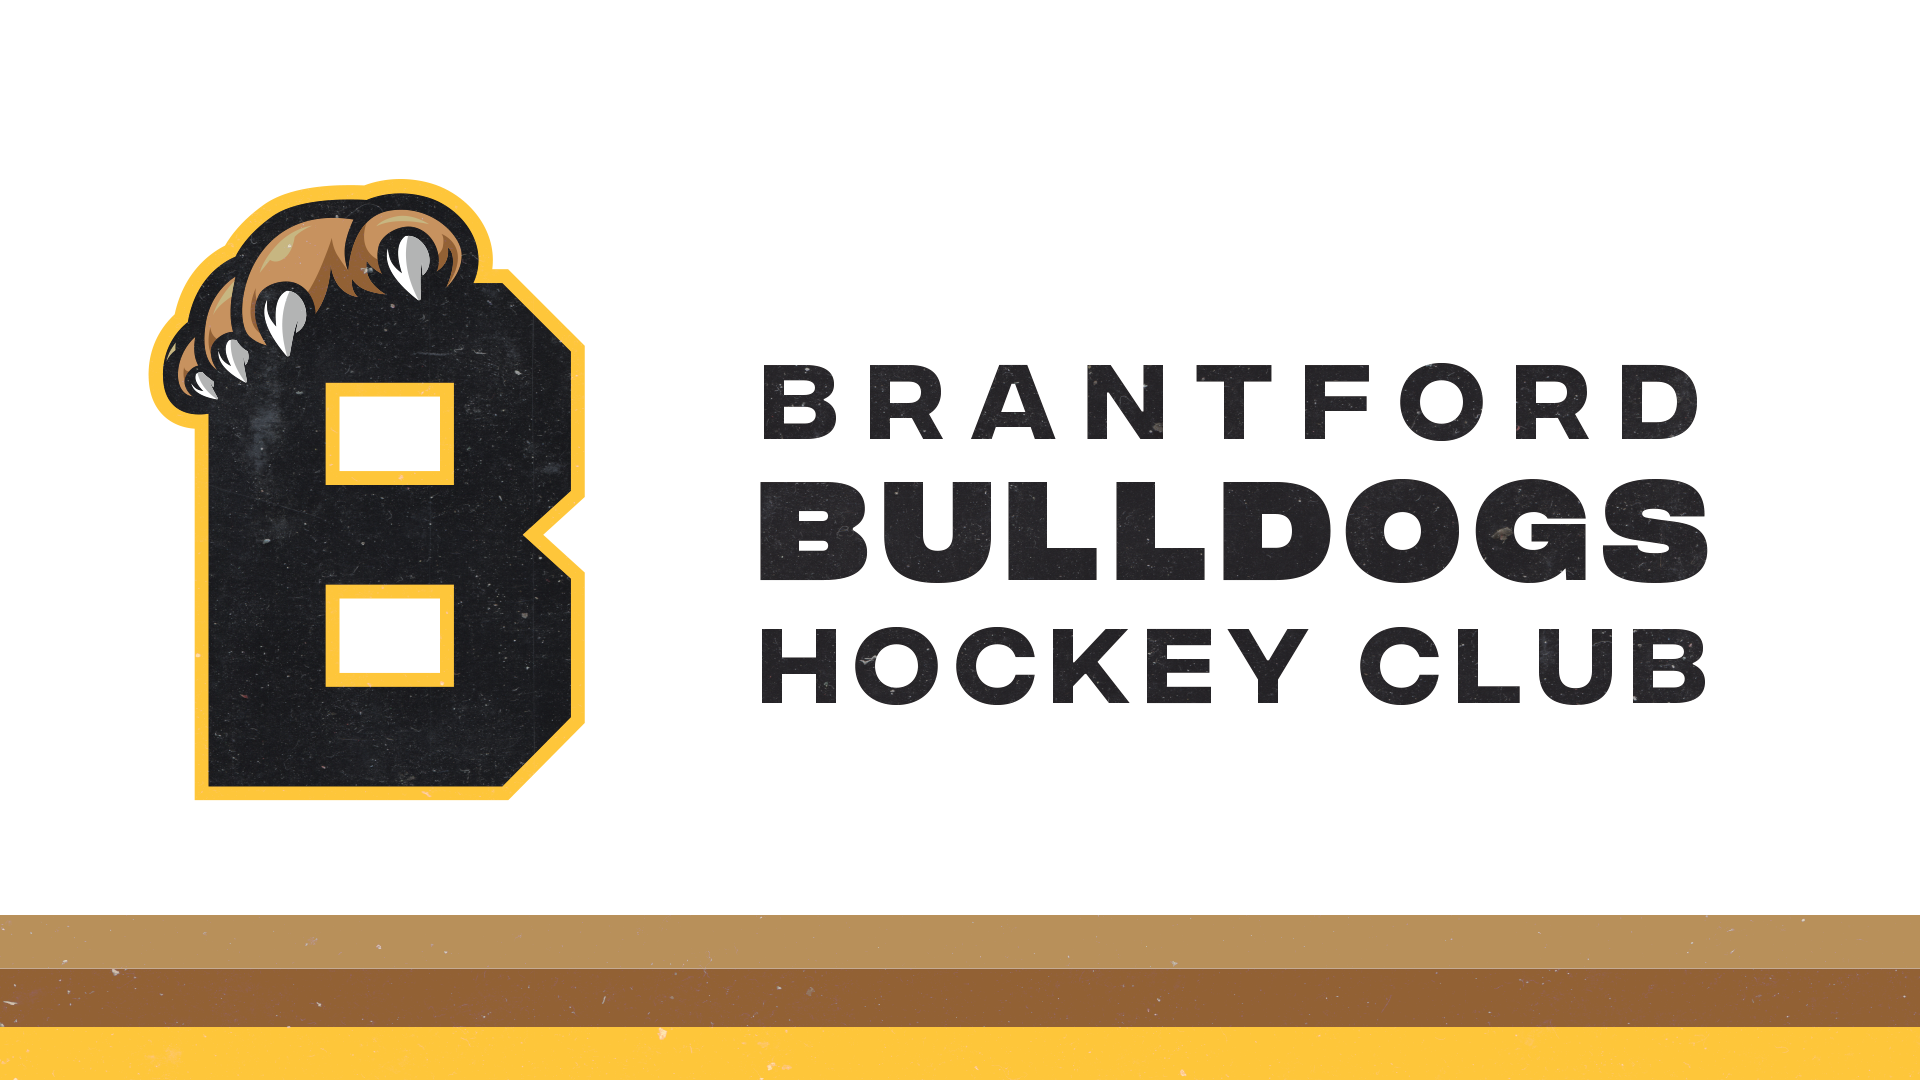 Brantford Bulldogs hockey club logo